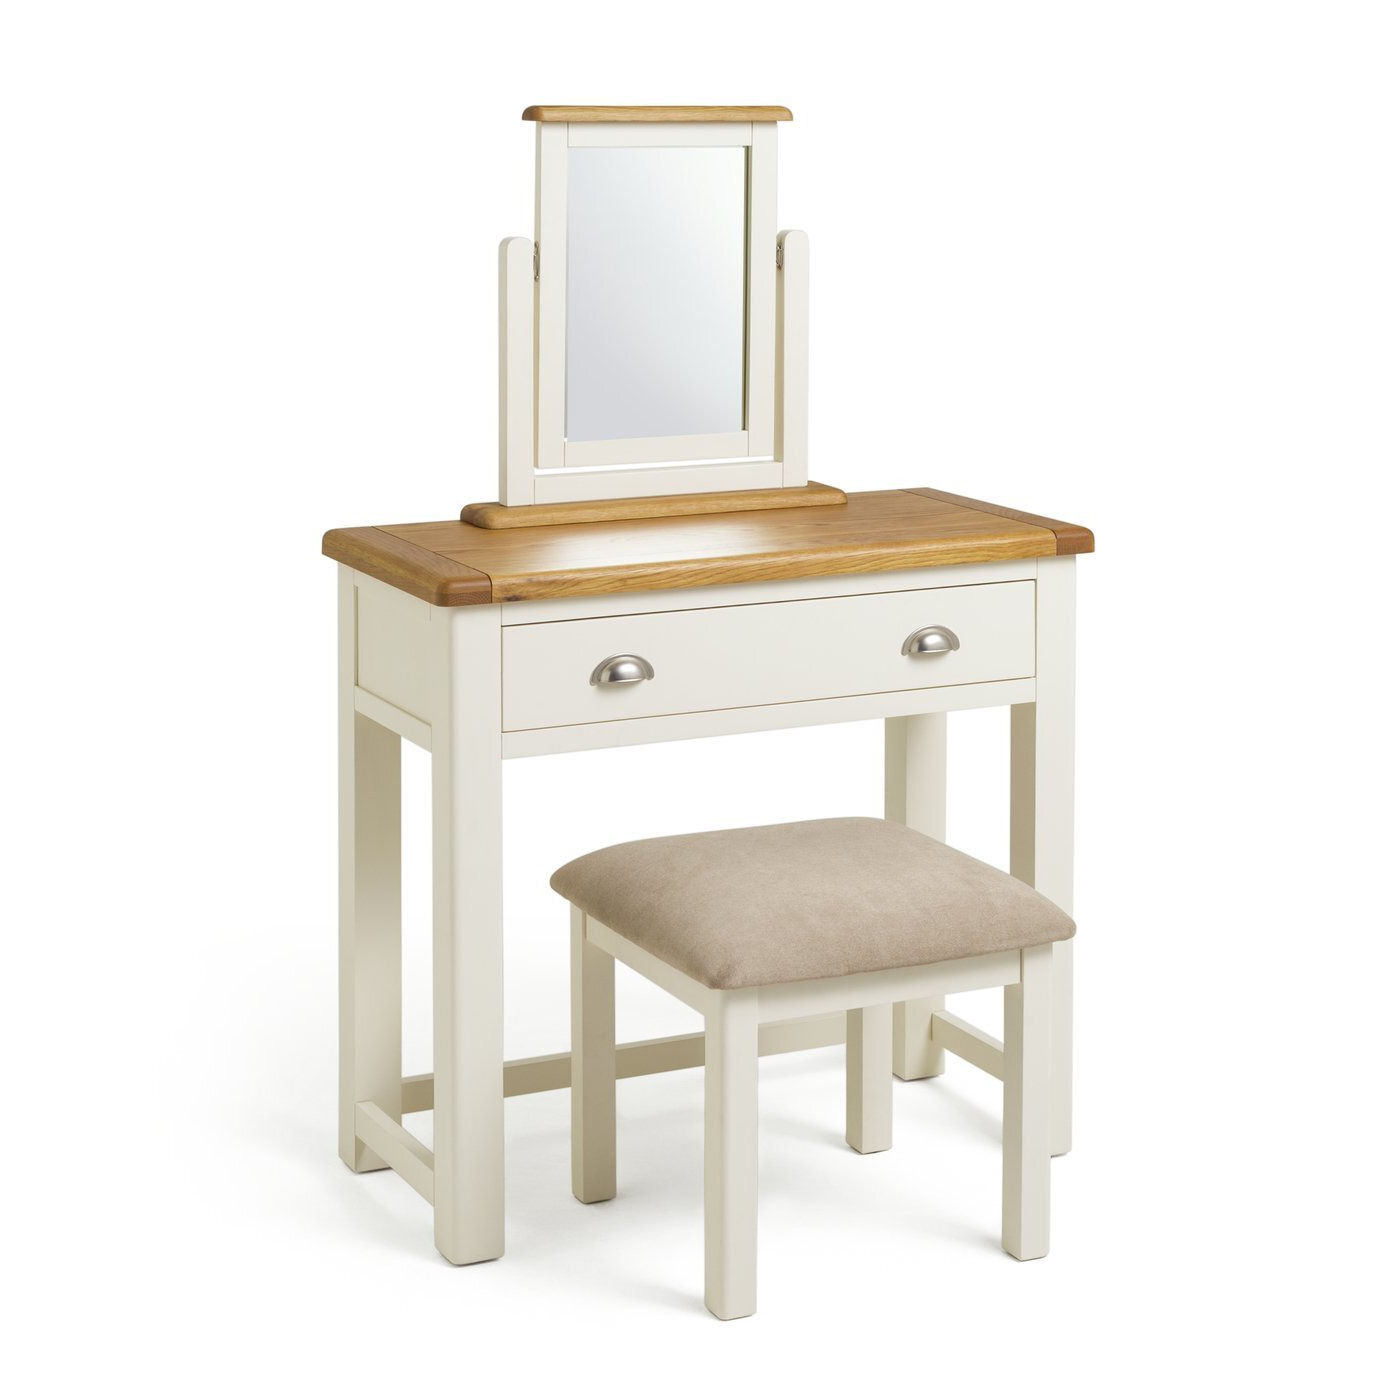 Habitat Kent Dressing Table, Stool Mirror - Cream/Oak - image 1